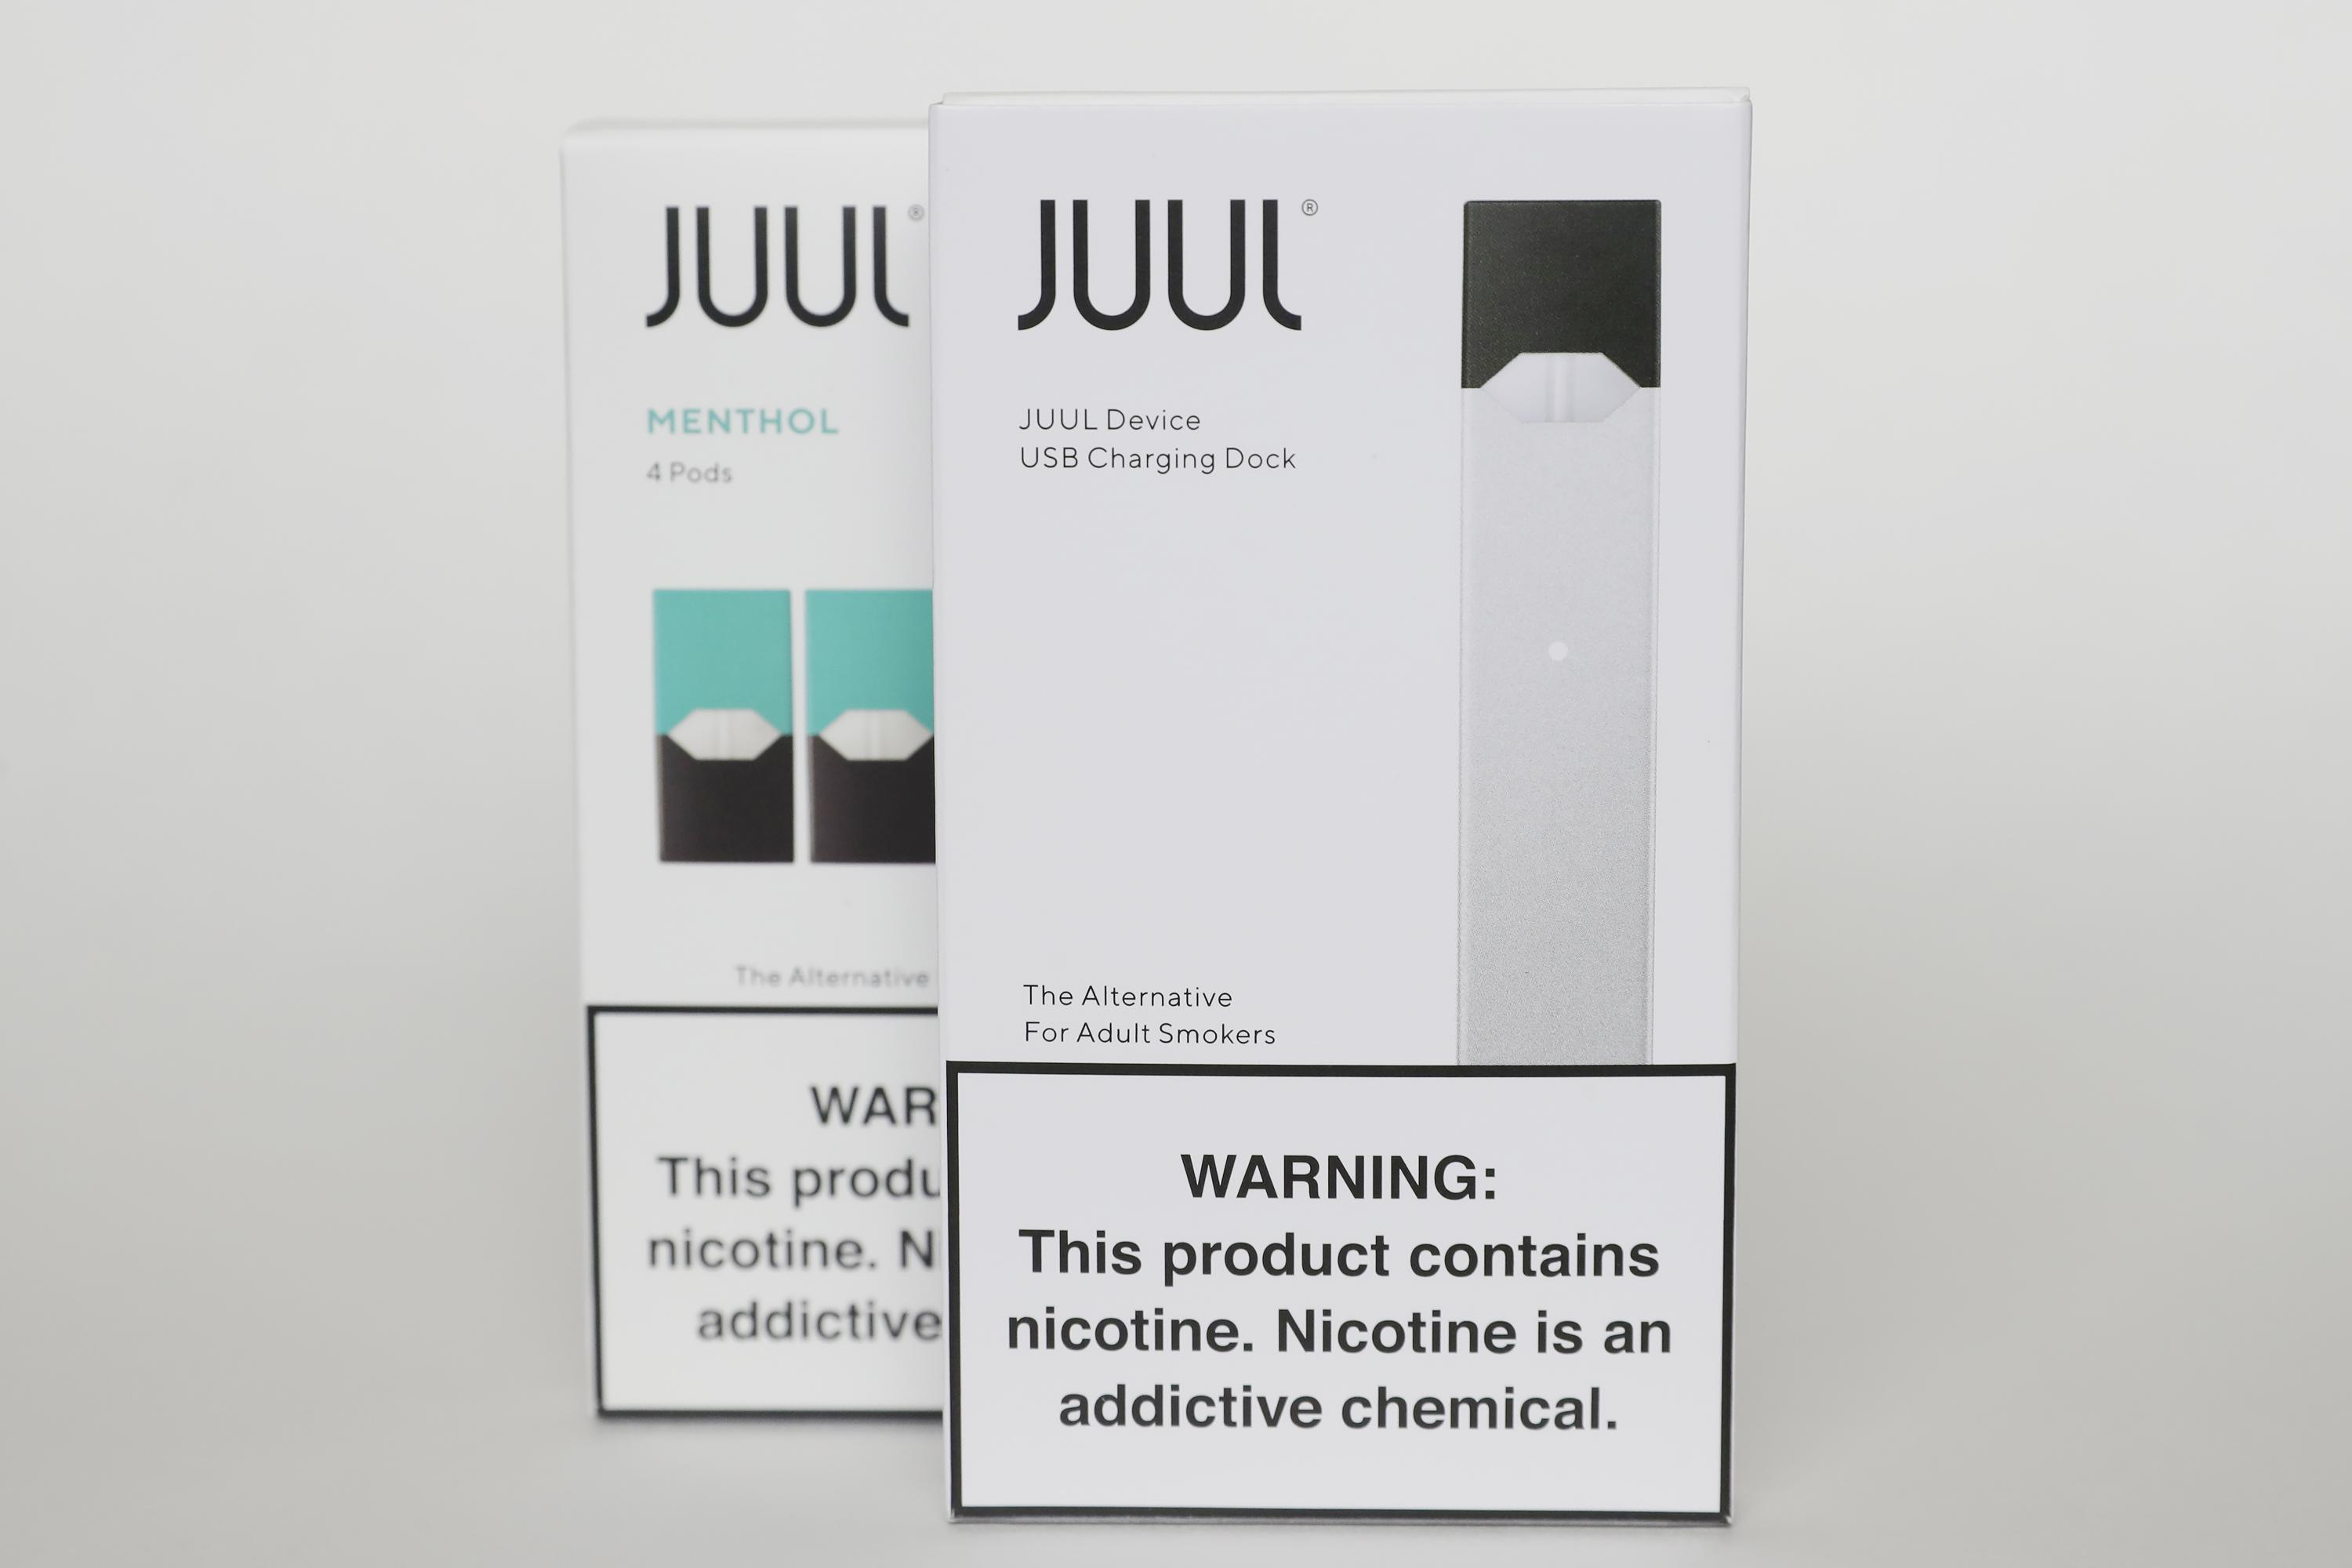 Source: Nicotine warning on JUUL e-cigarettes